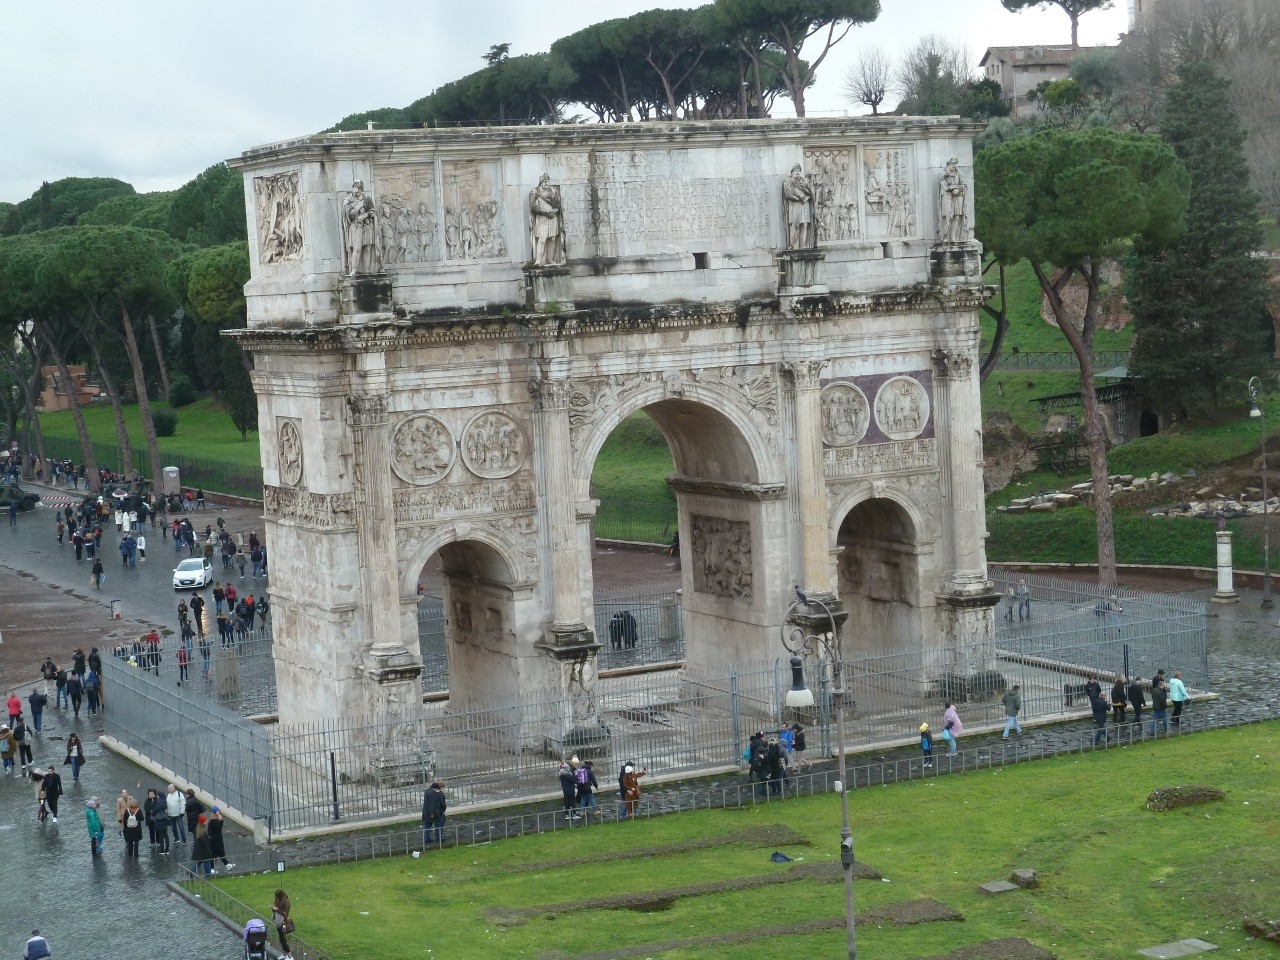 Roman arch with pedestrians